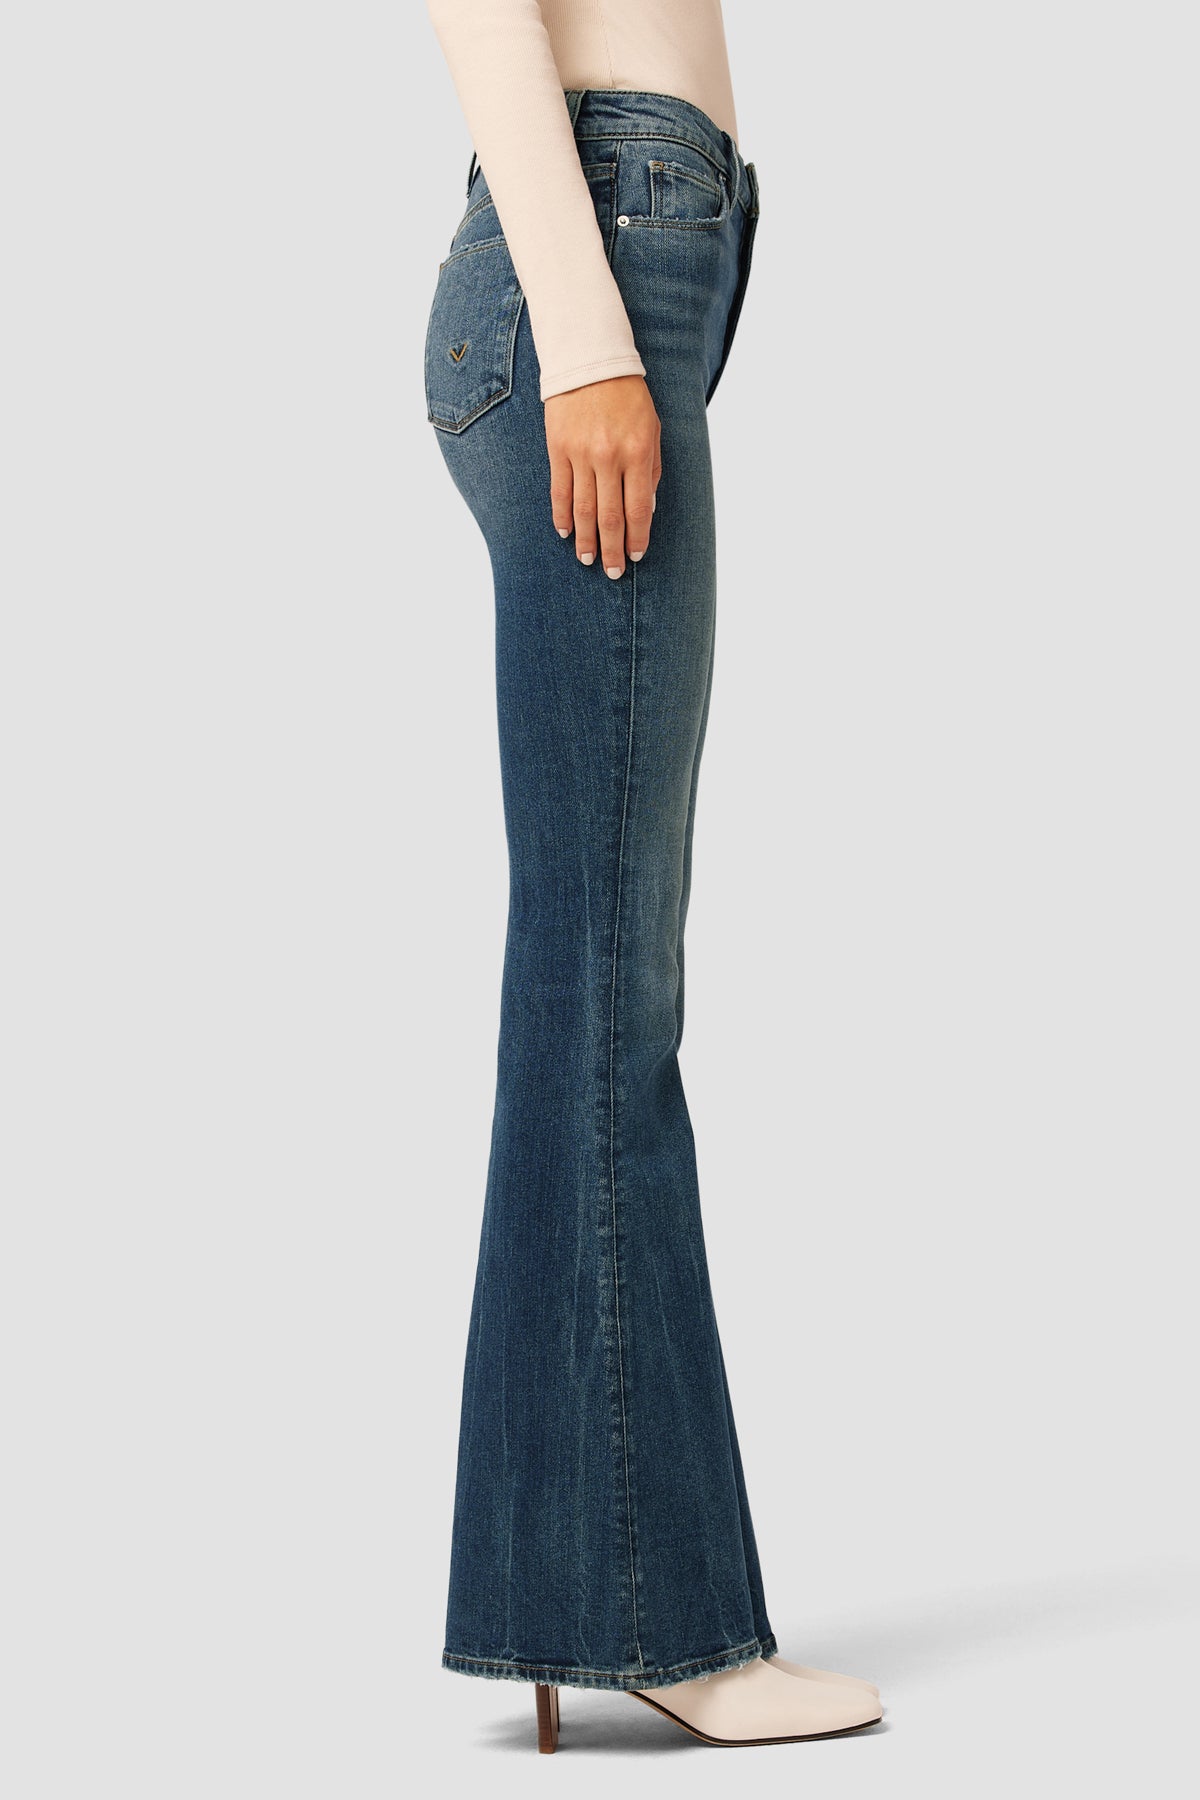 Women's Ultra High Rise Stretch Flare Jean, Women's Bottoms